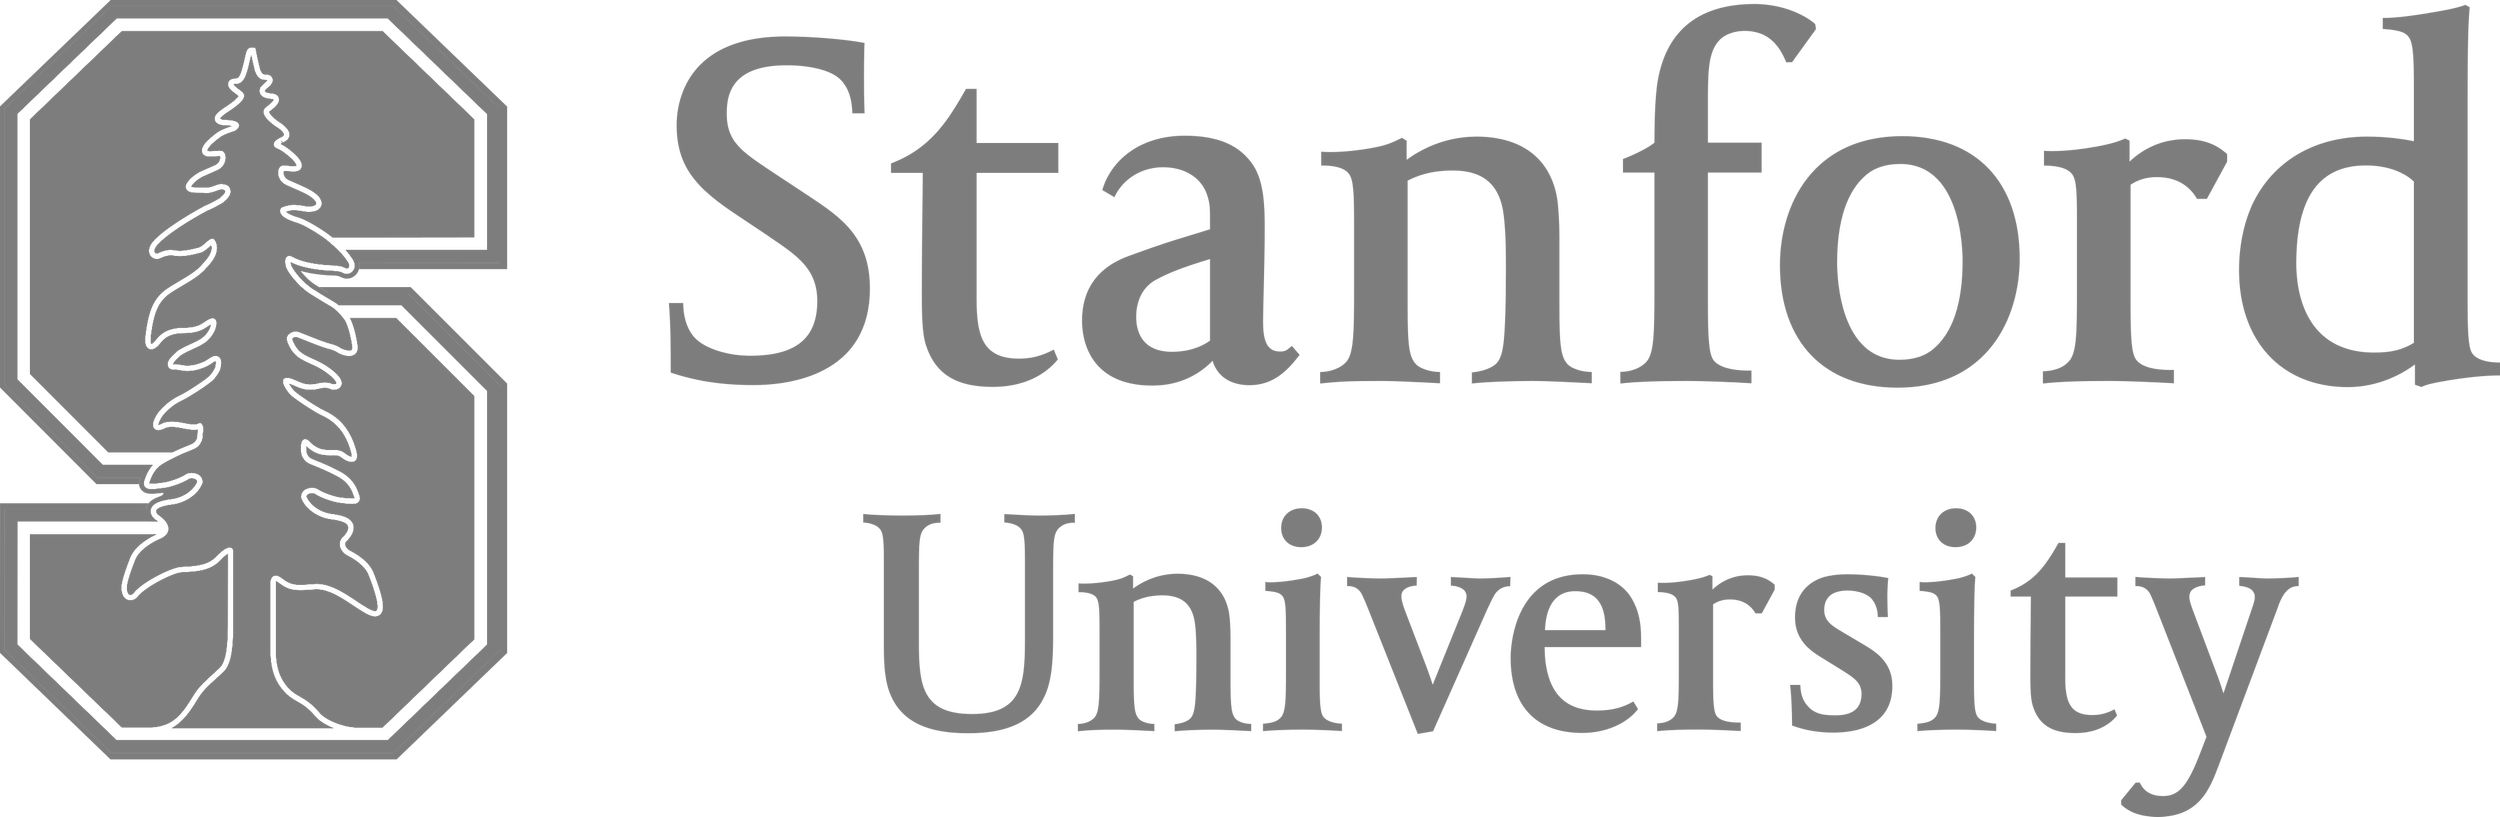 stanford-university-logo_gray.png